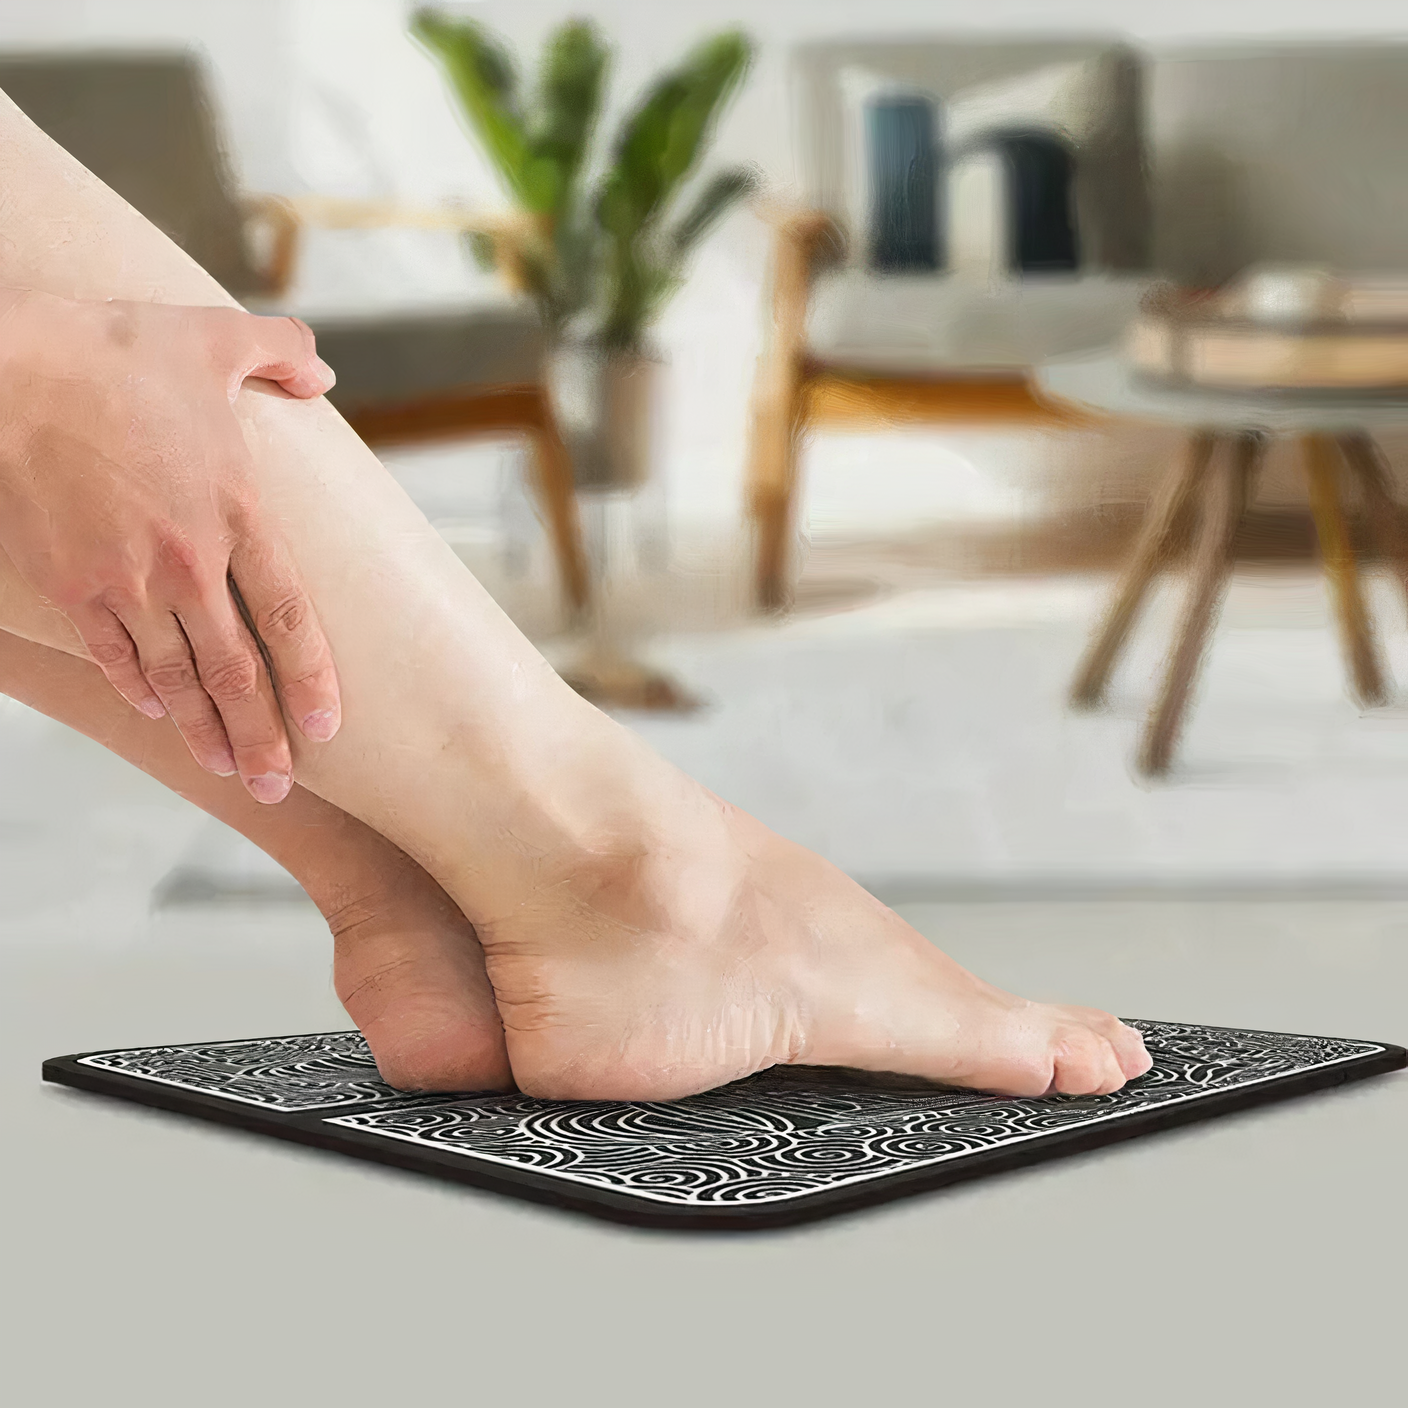 FootEase™ - Fußmassagegerät